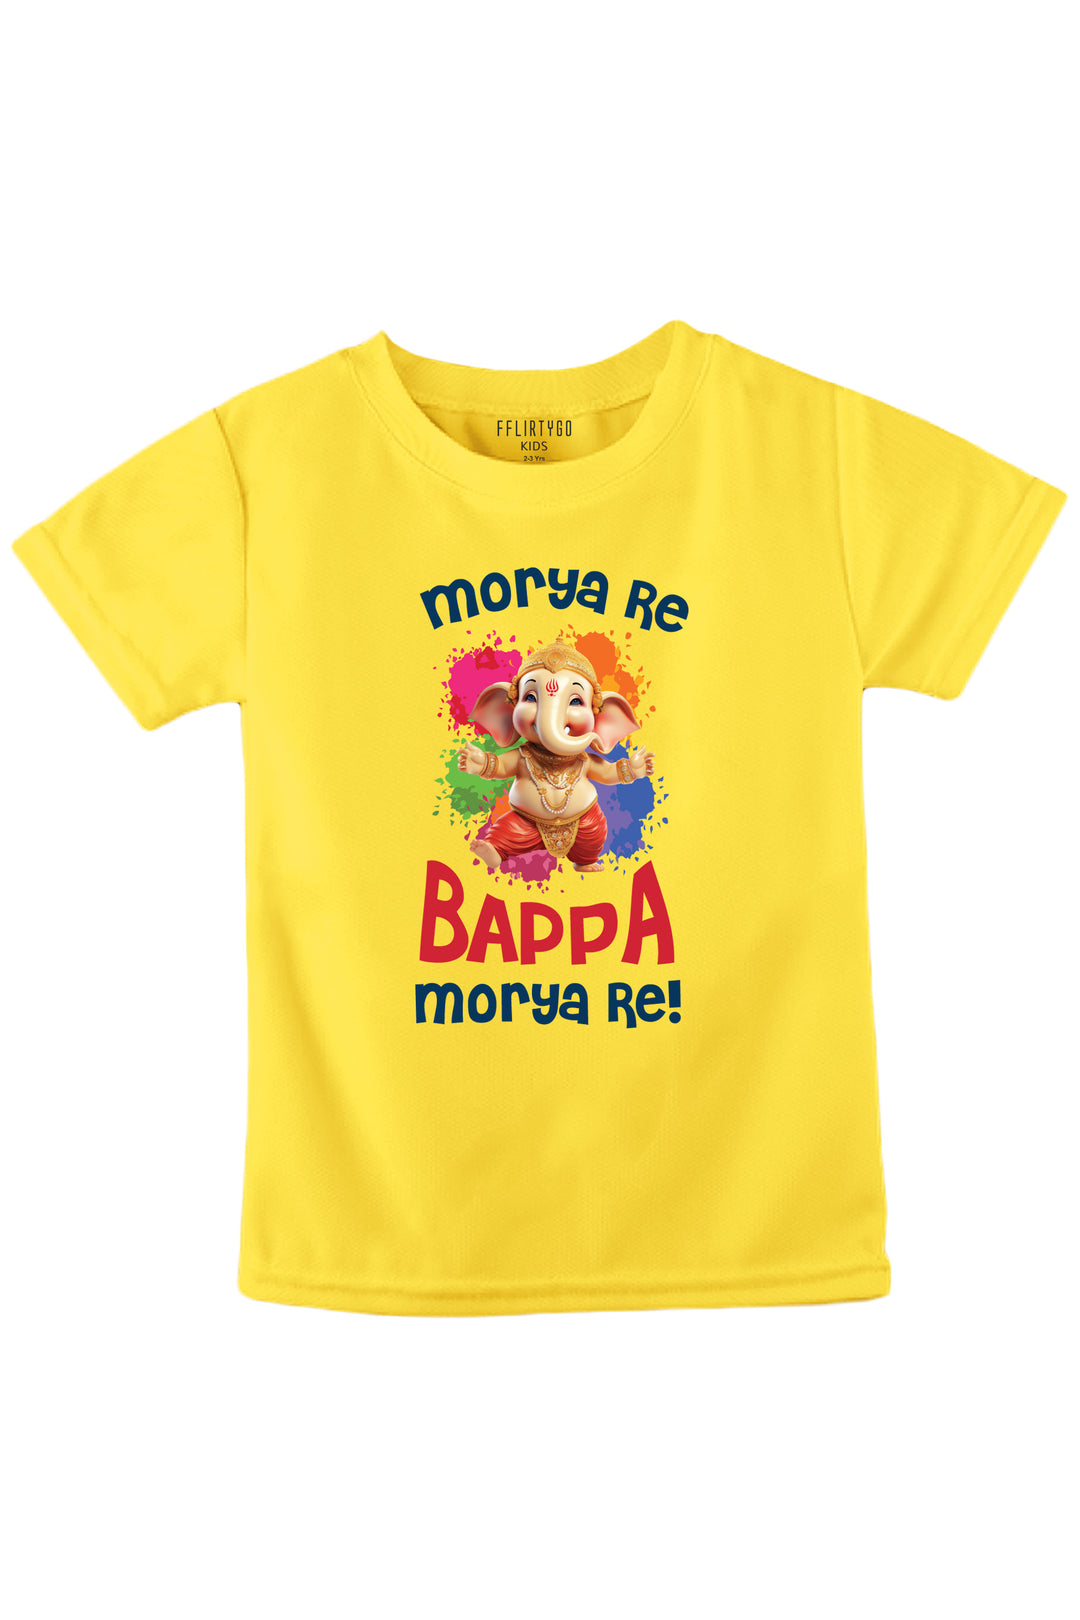 Morya Re Bappa Morye Re Kids T Shirt